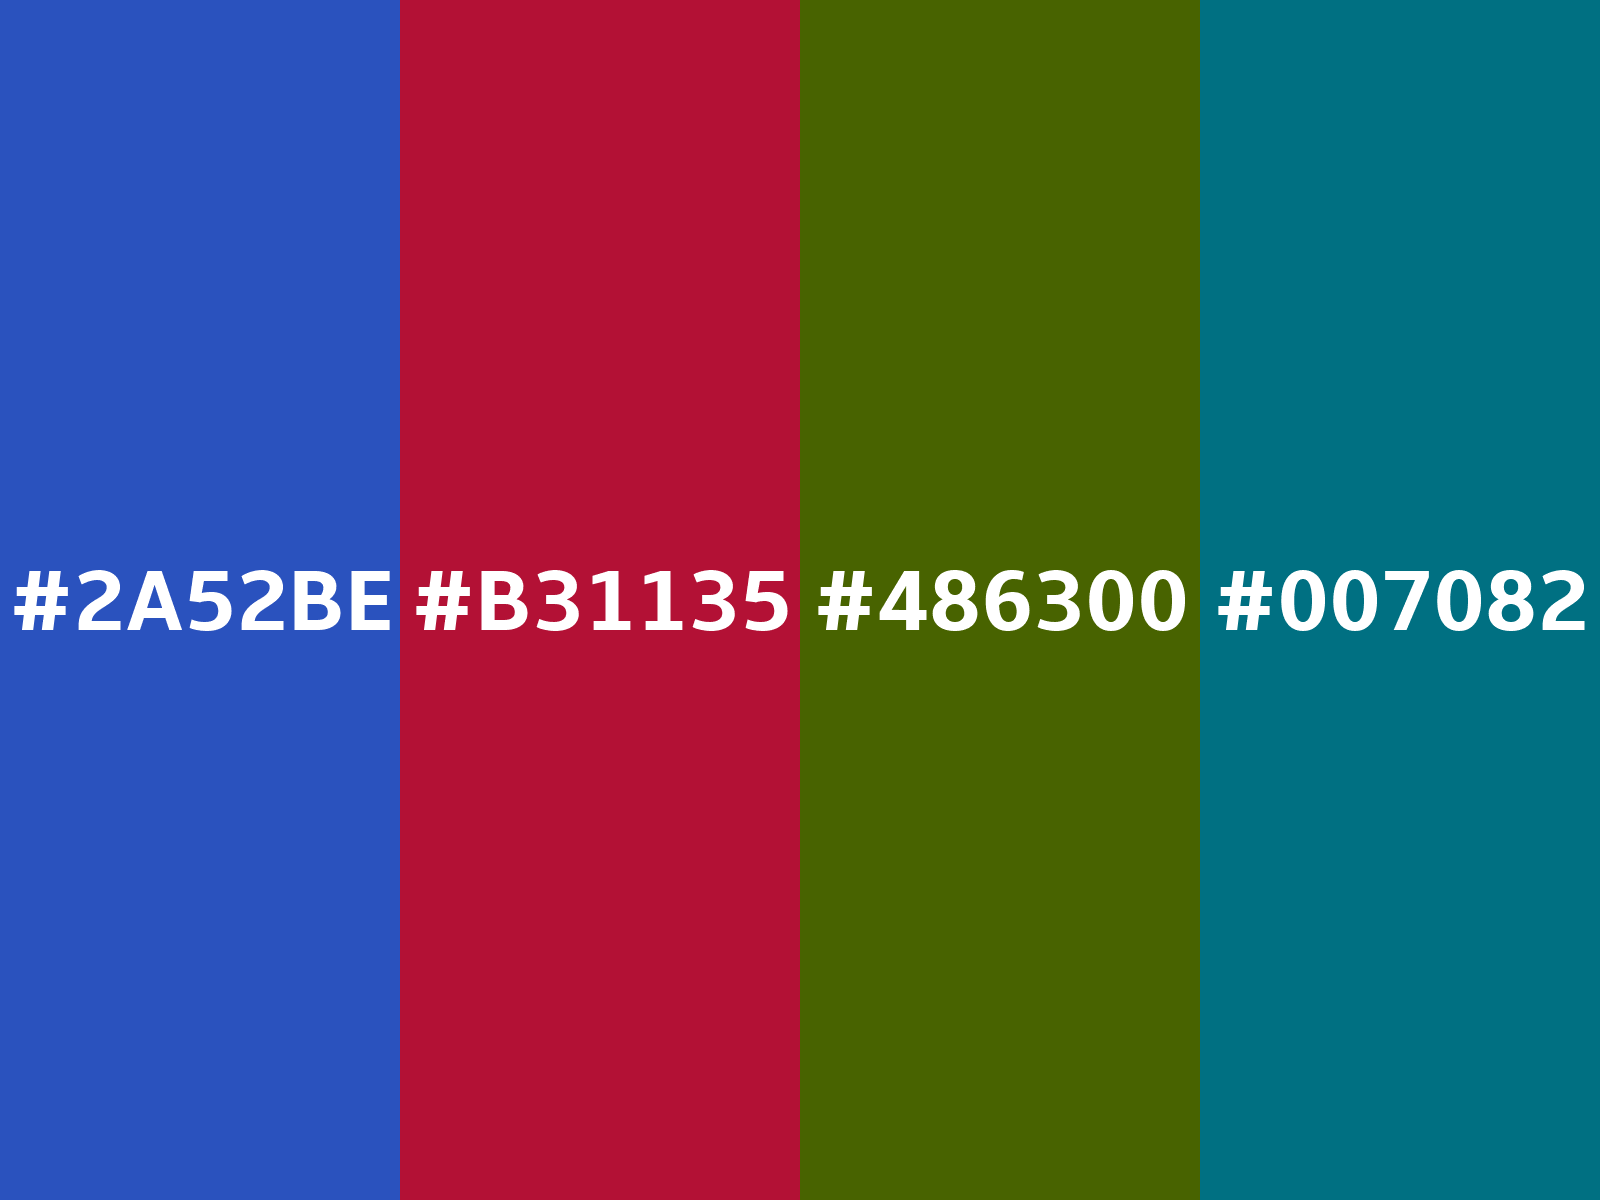 Cerulean Blue Color, 2a52be information, Hsl, Rgb